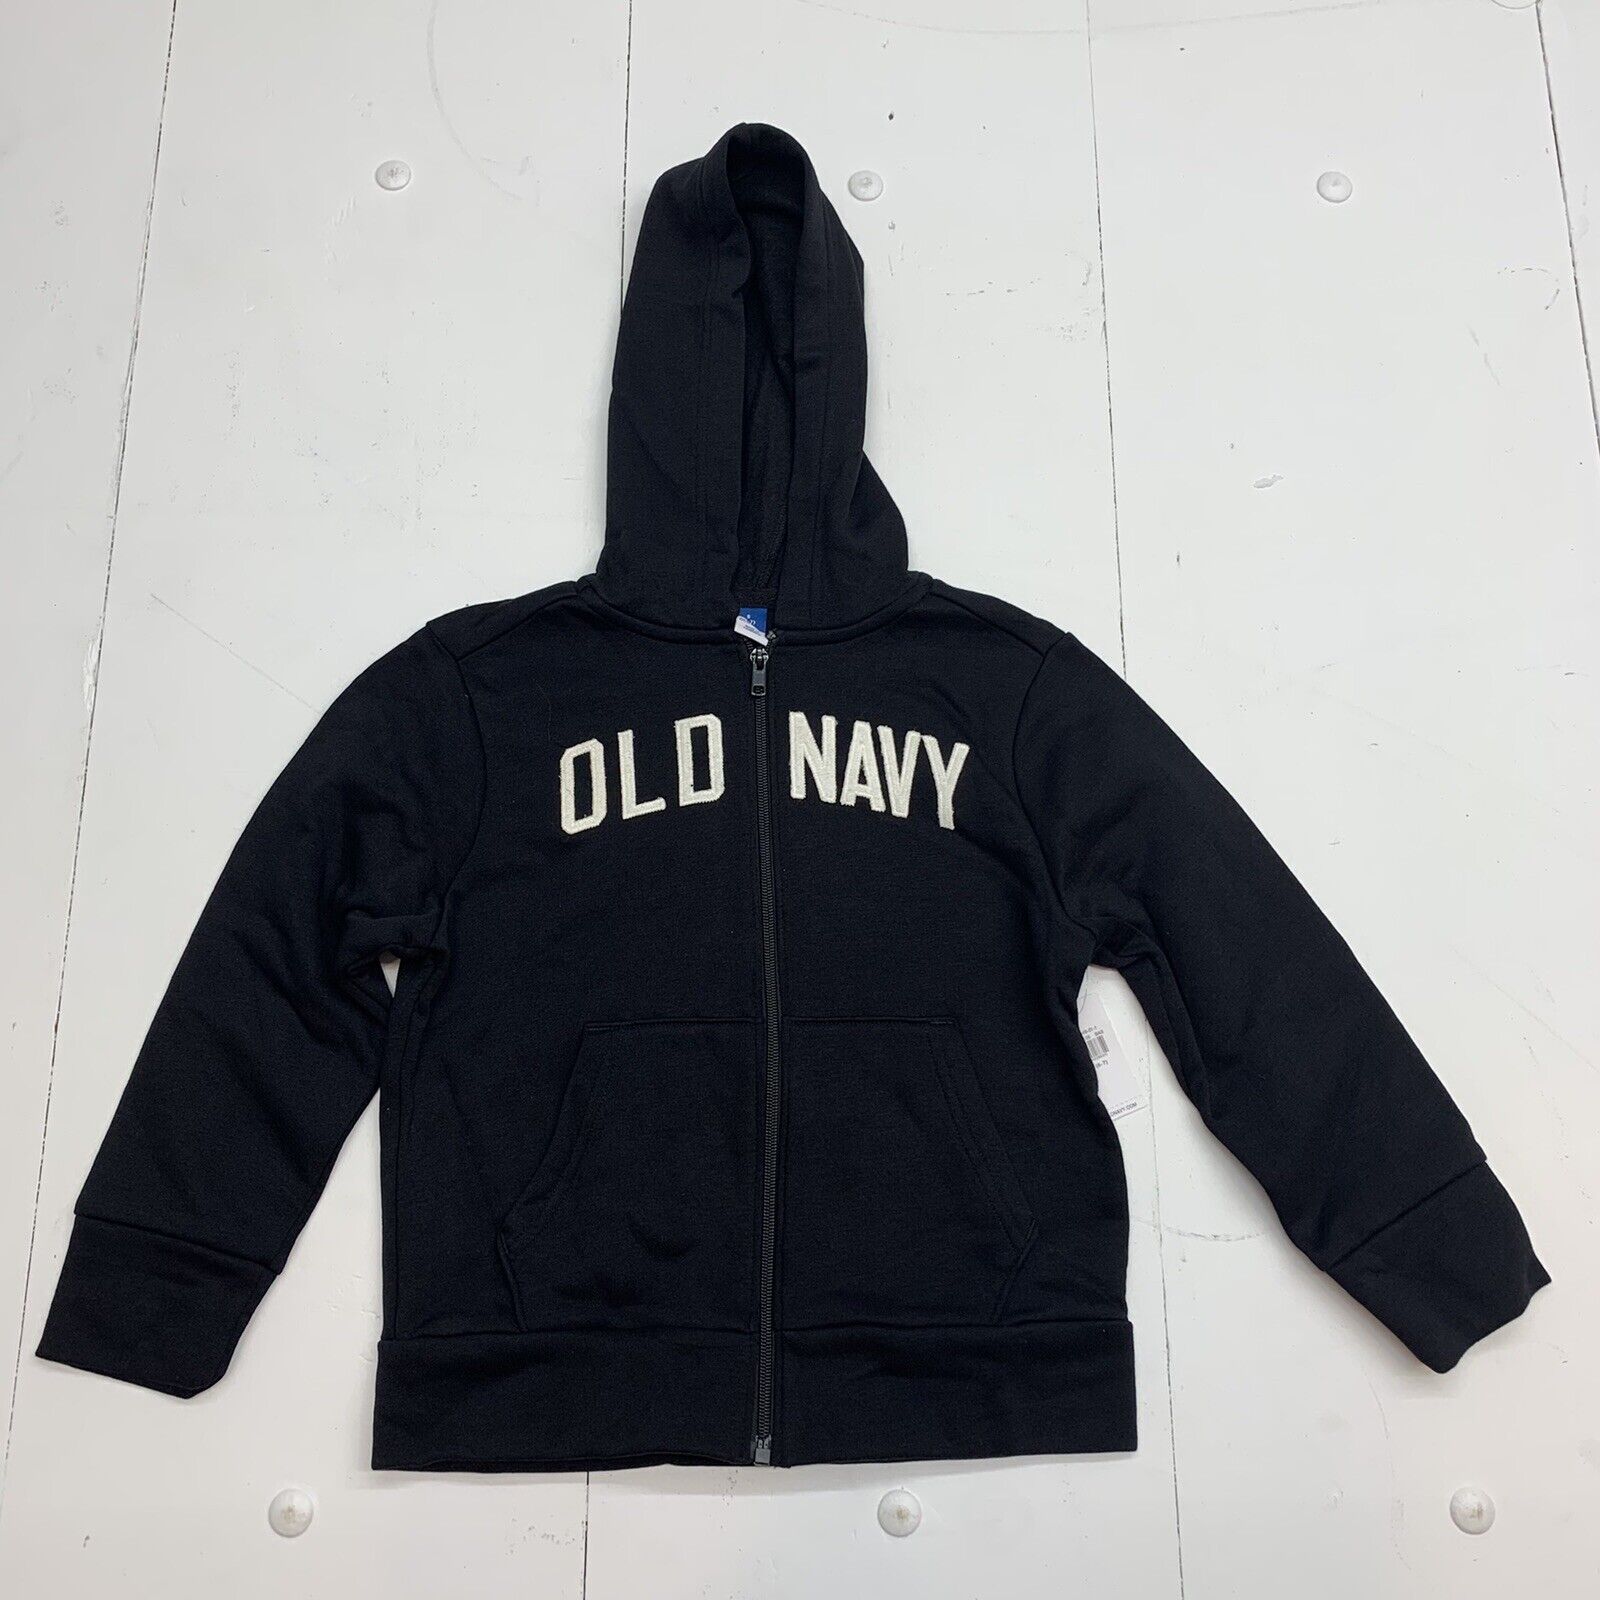 Old Navy Full Zip Black Jacket Size Small